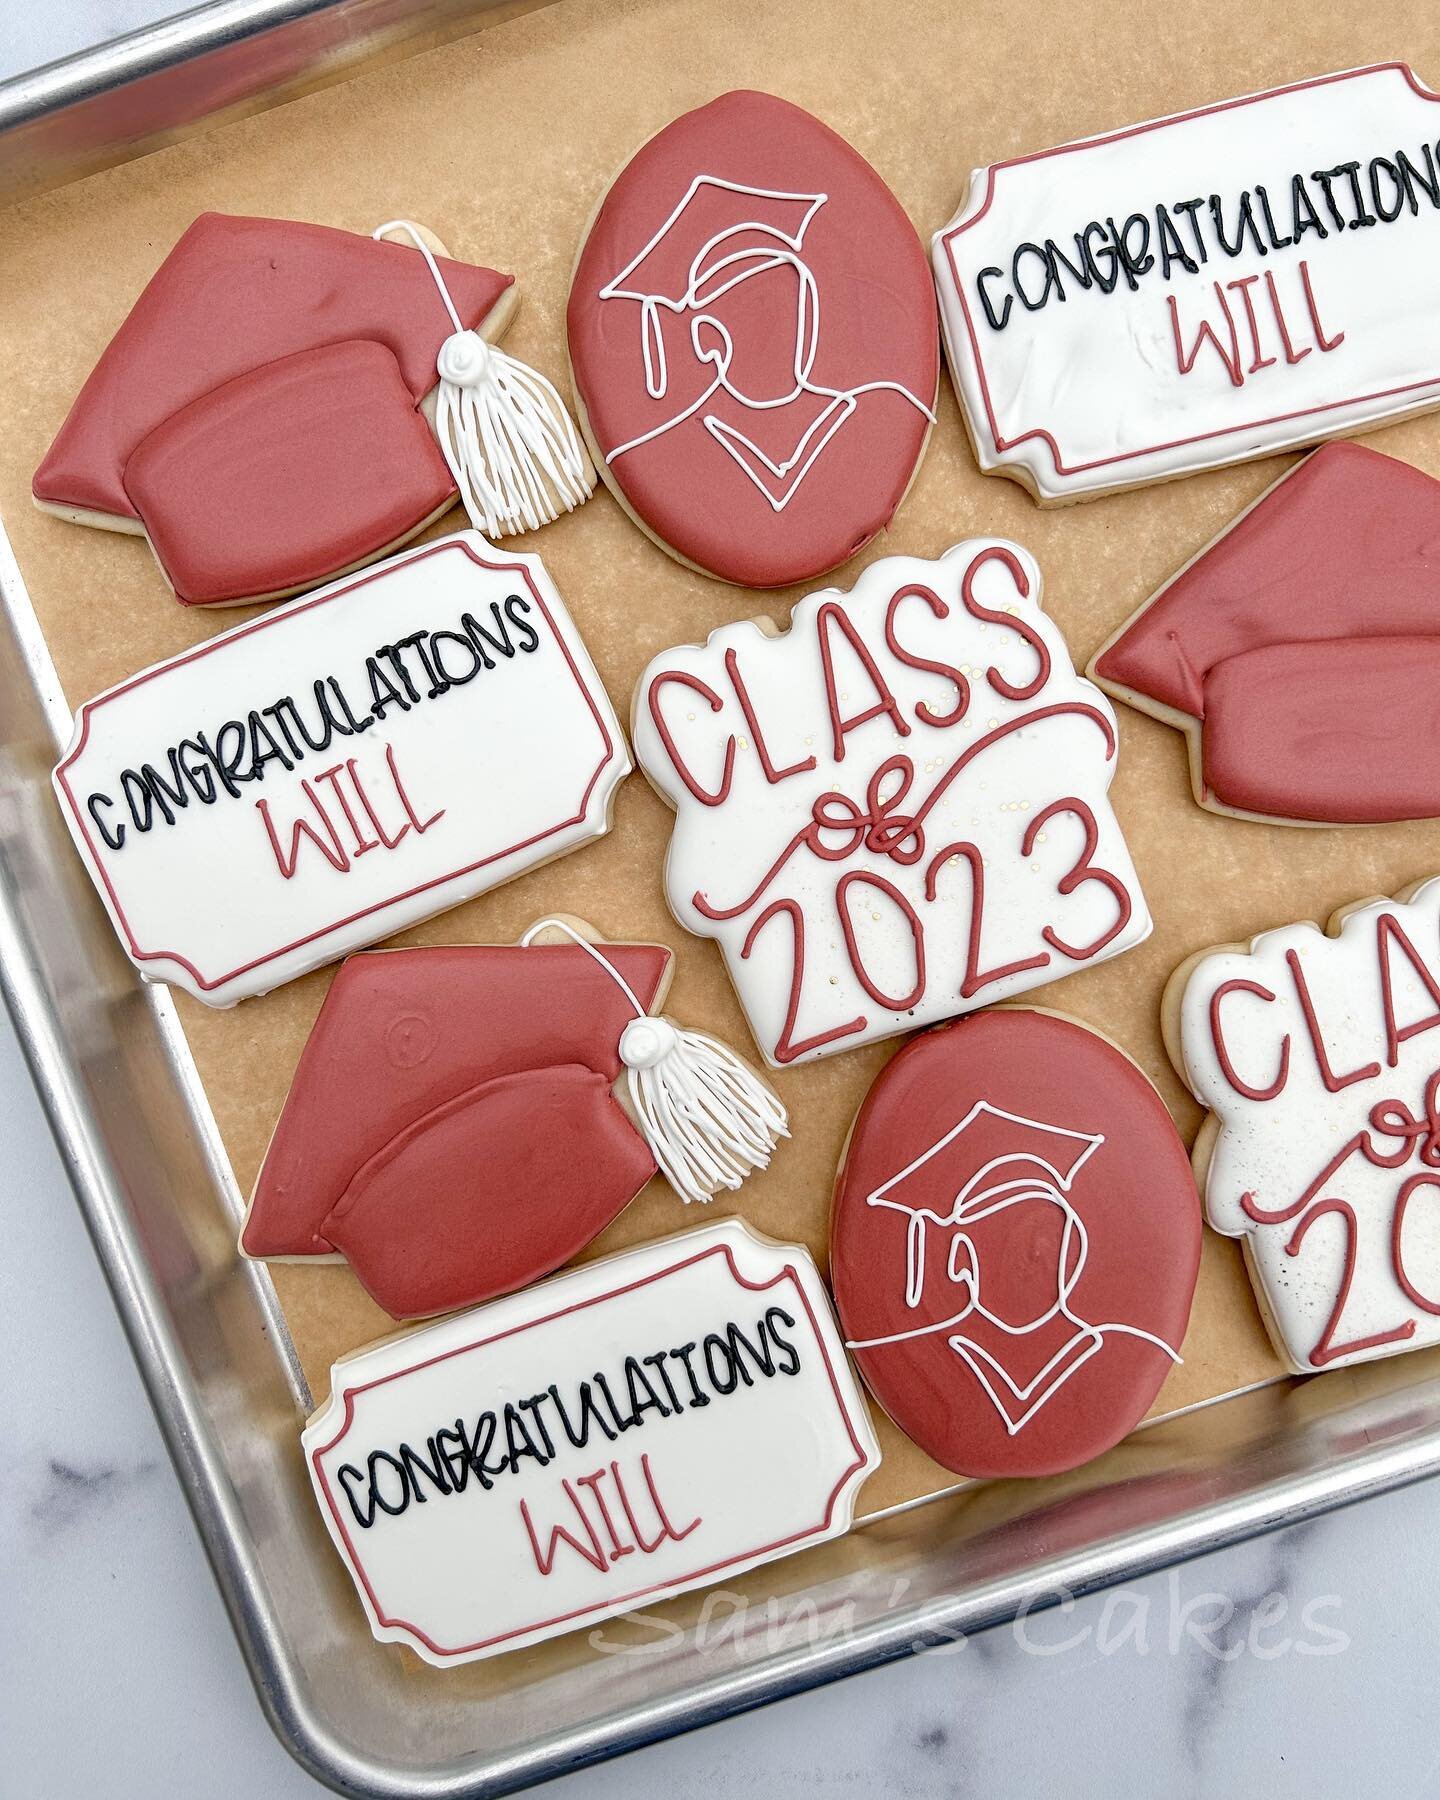 Happy graduation season!!
.
.
#samscakes #gradszn #sjci #2023 #2023grad #supportlocal #cookies #sugarcookies #cookiesofinstagram #buffalo